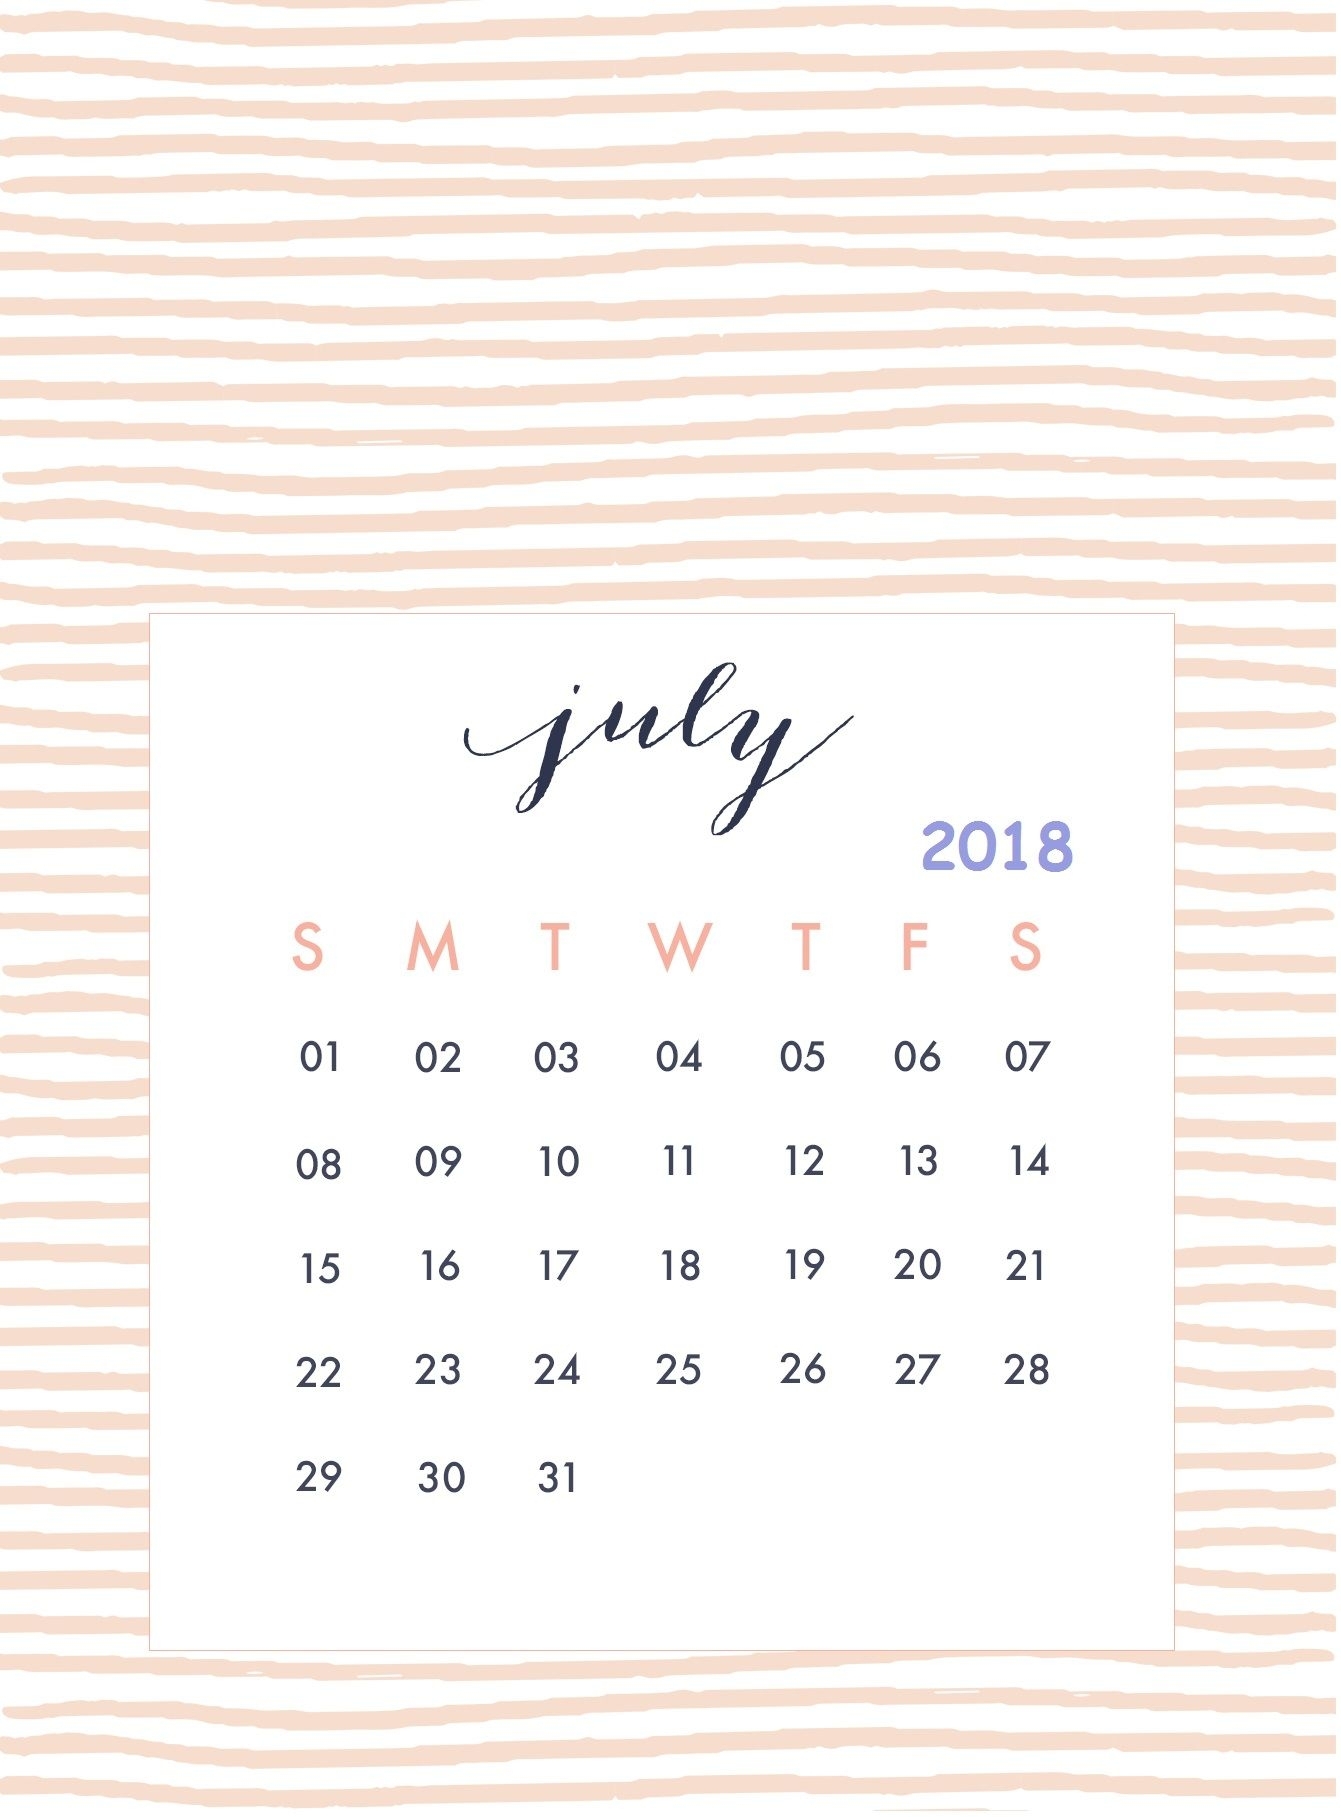 July 2018 Iphone Wallpaper Calendar In 2019 | Calendar